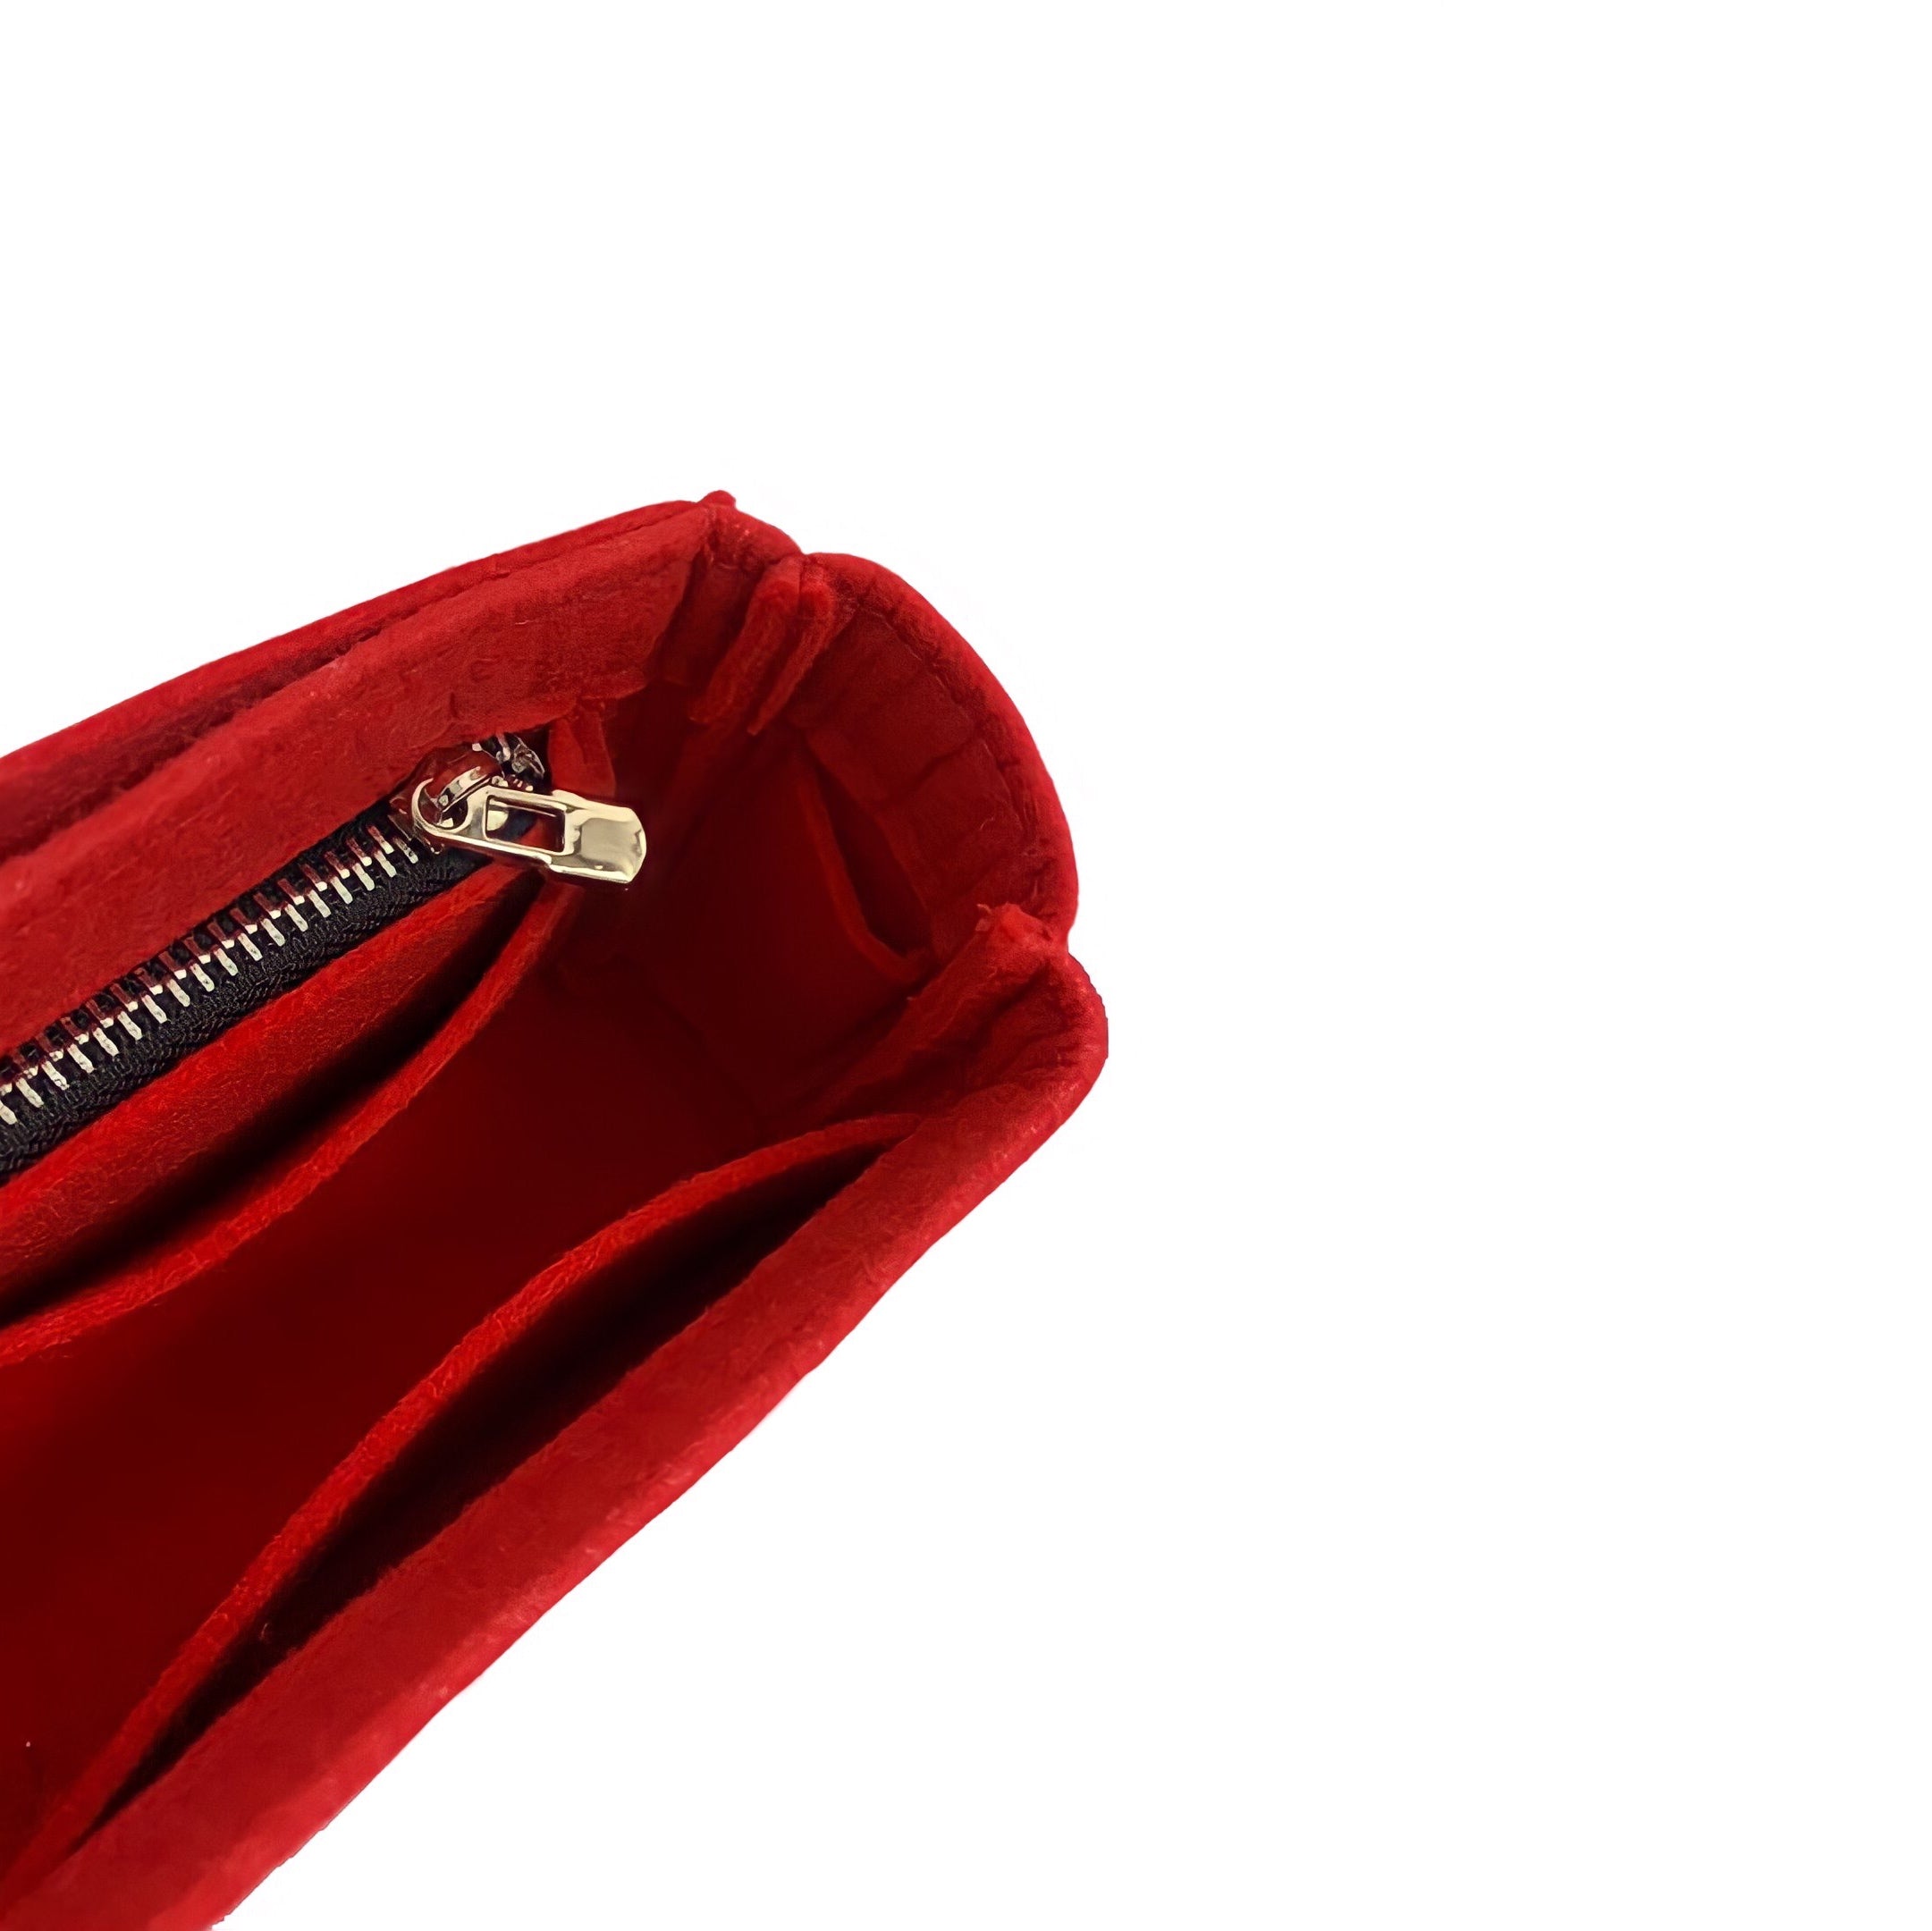 BaginBag | Handbag Organizer For Chanel Classic Flap Bag Maxi size Bag | Chanel Purse Insert  | Bag Liner | Chanel Insert Organizer | Chanel Organizer | Chanel Inner Bag | Luxury bag | Chanel Bag protector | Chanel bag Insert